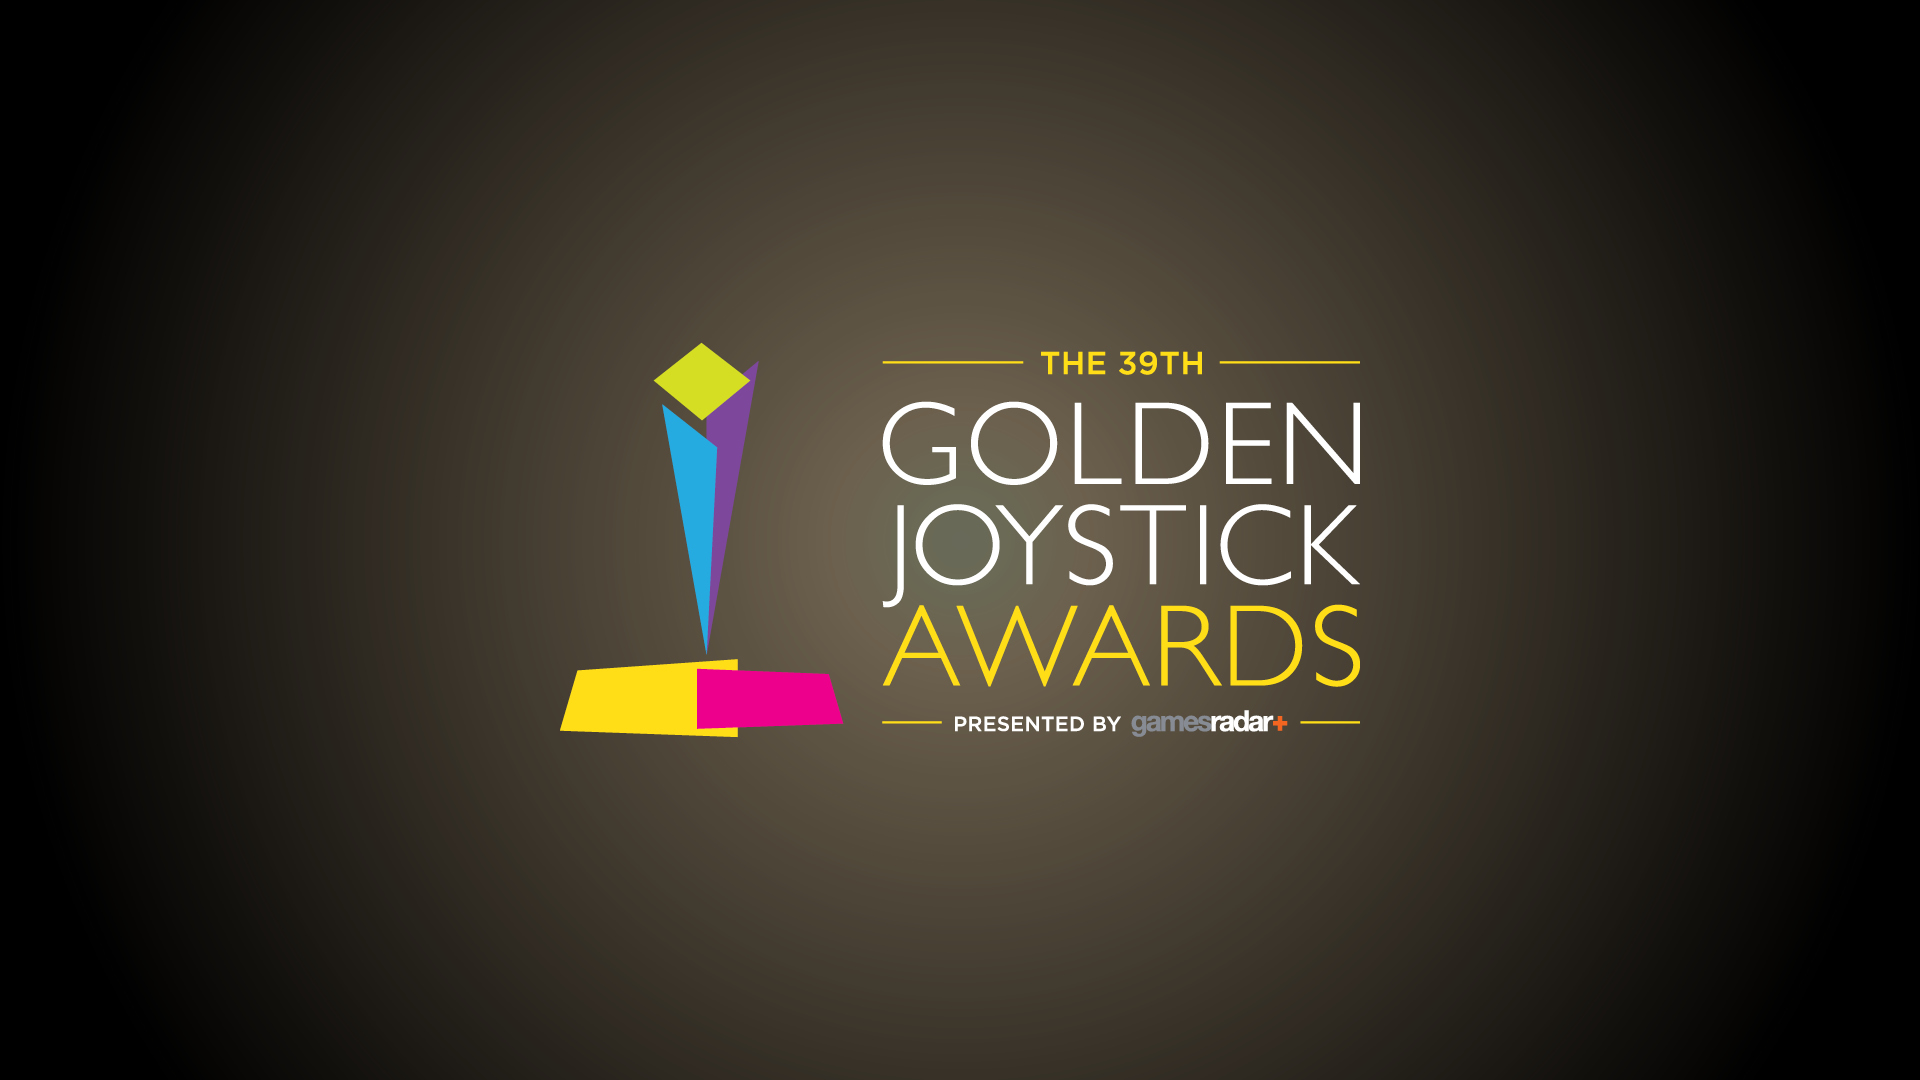 5 Highlights from the Golden Joystick Awards 2021